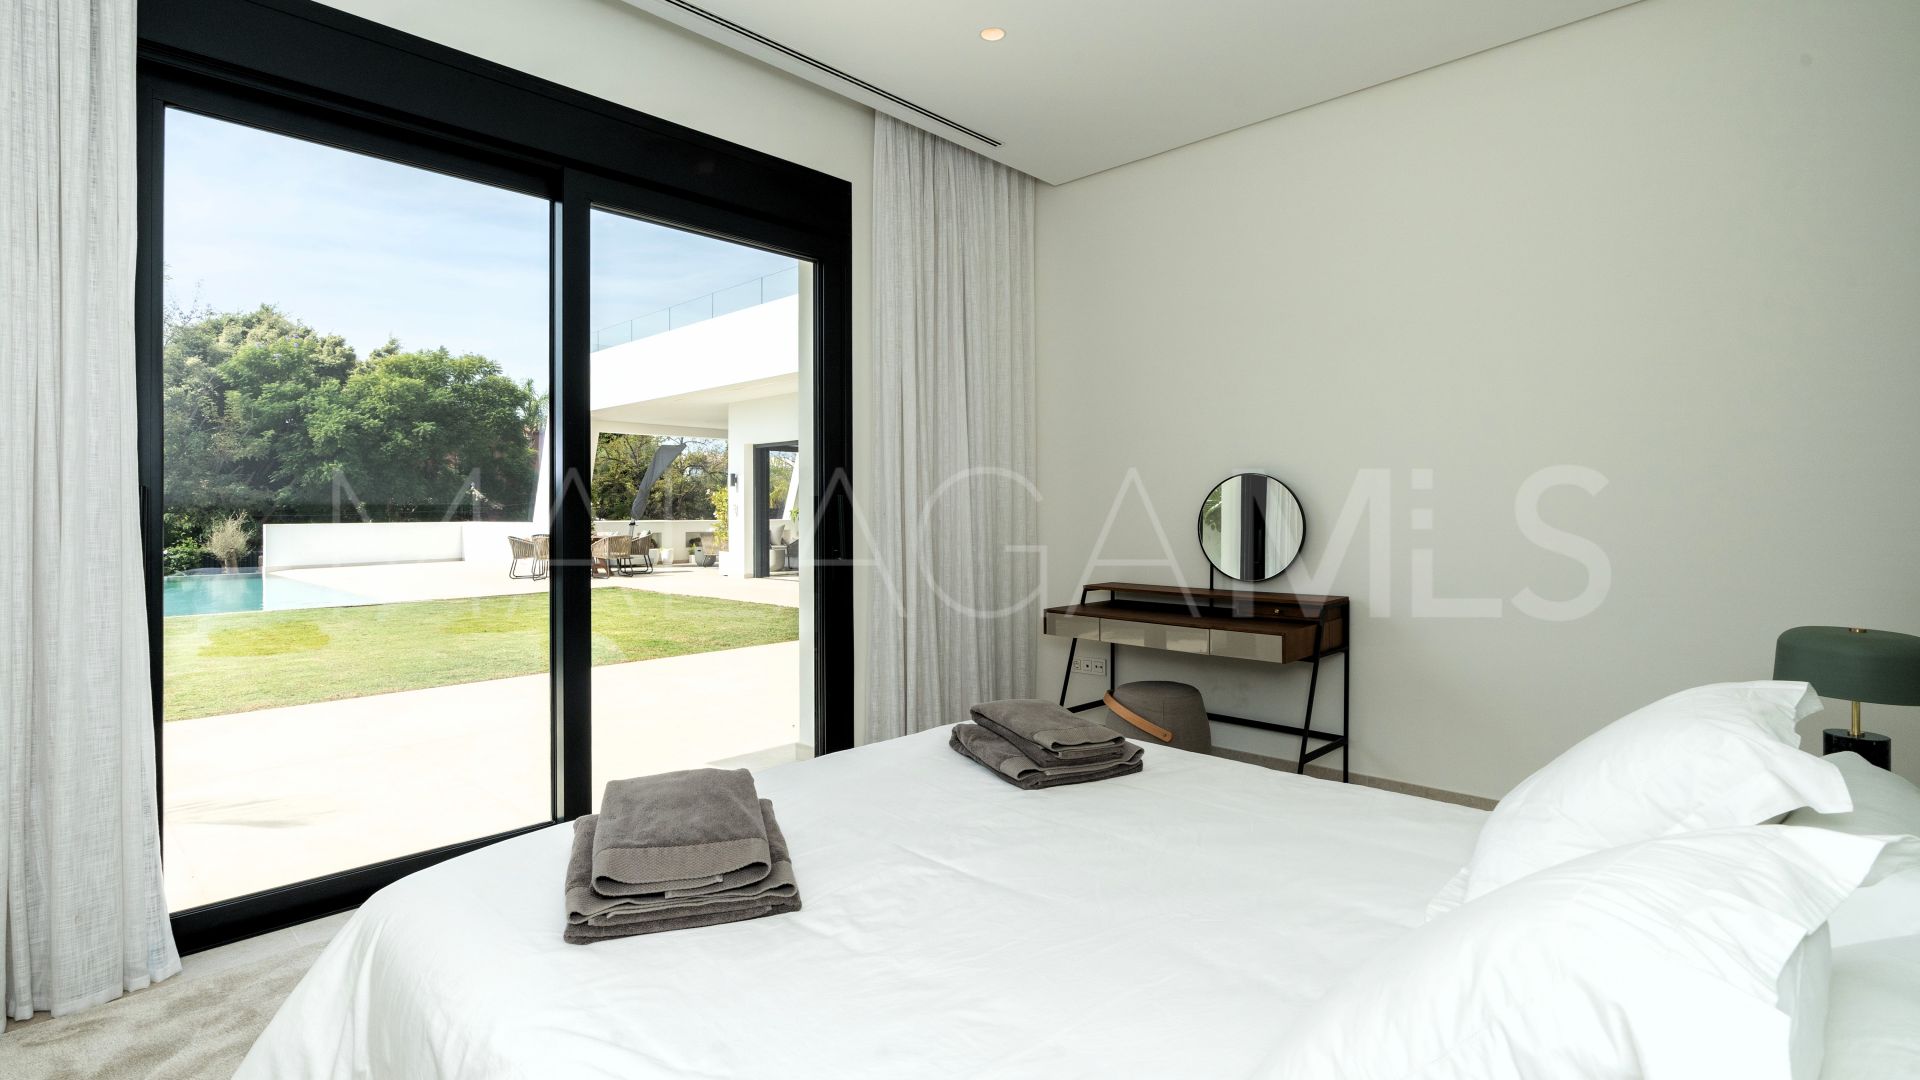 Buy villa in Linda Vista Baja with 5 bedrooms